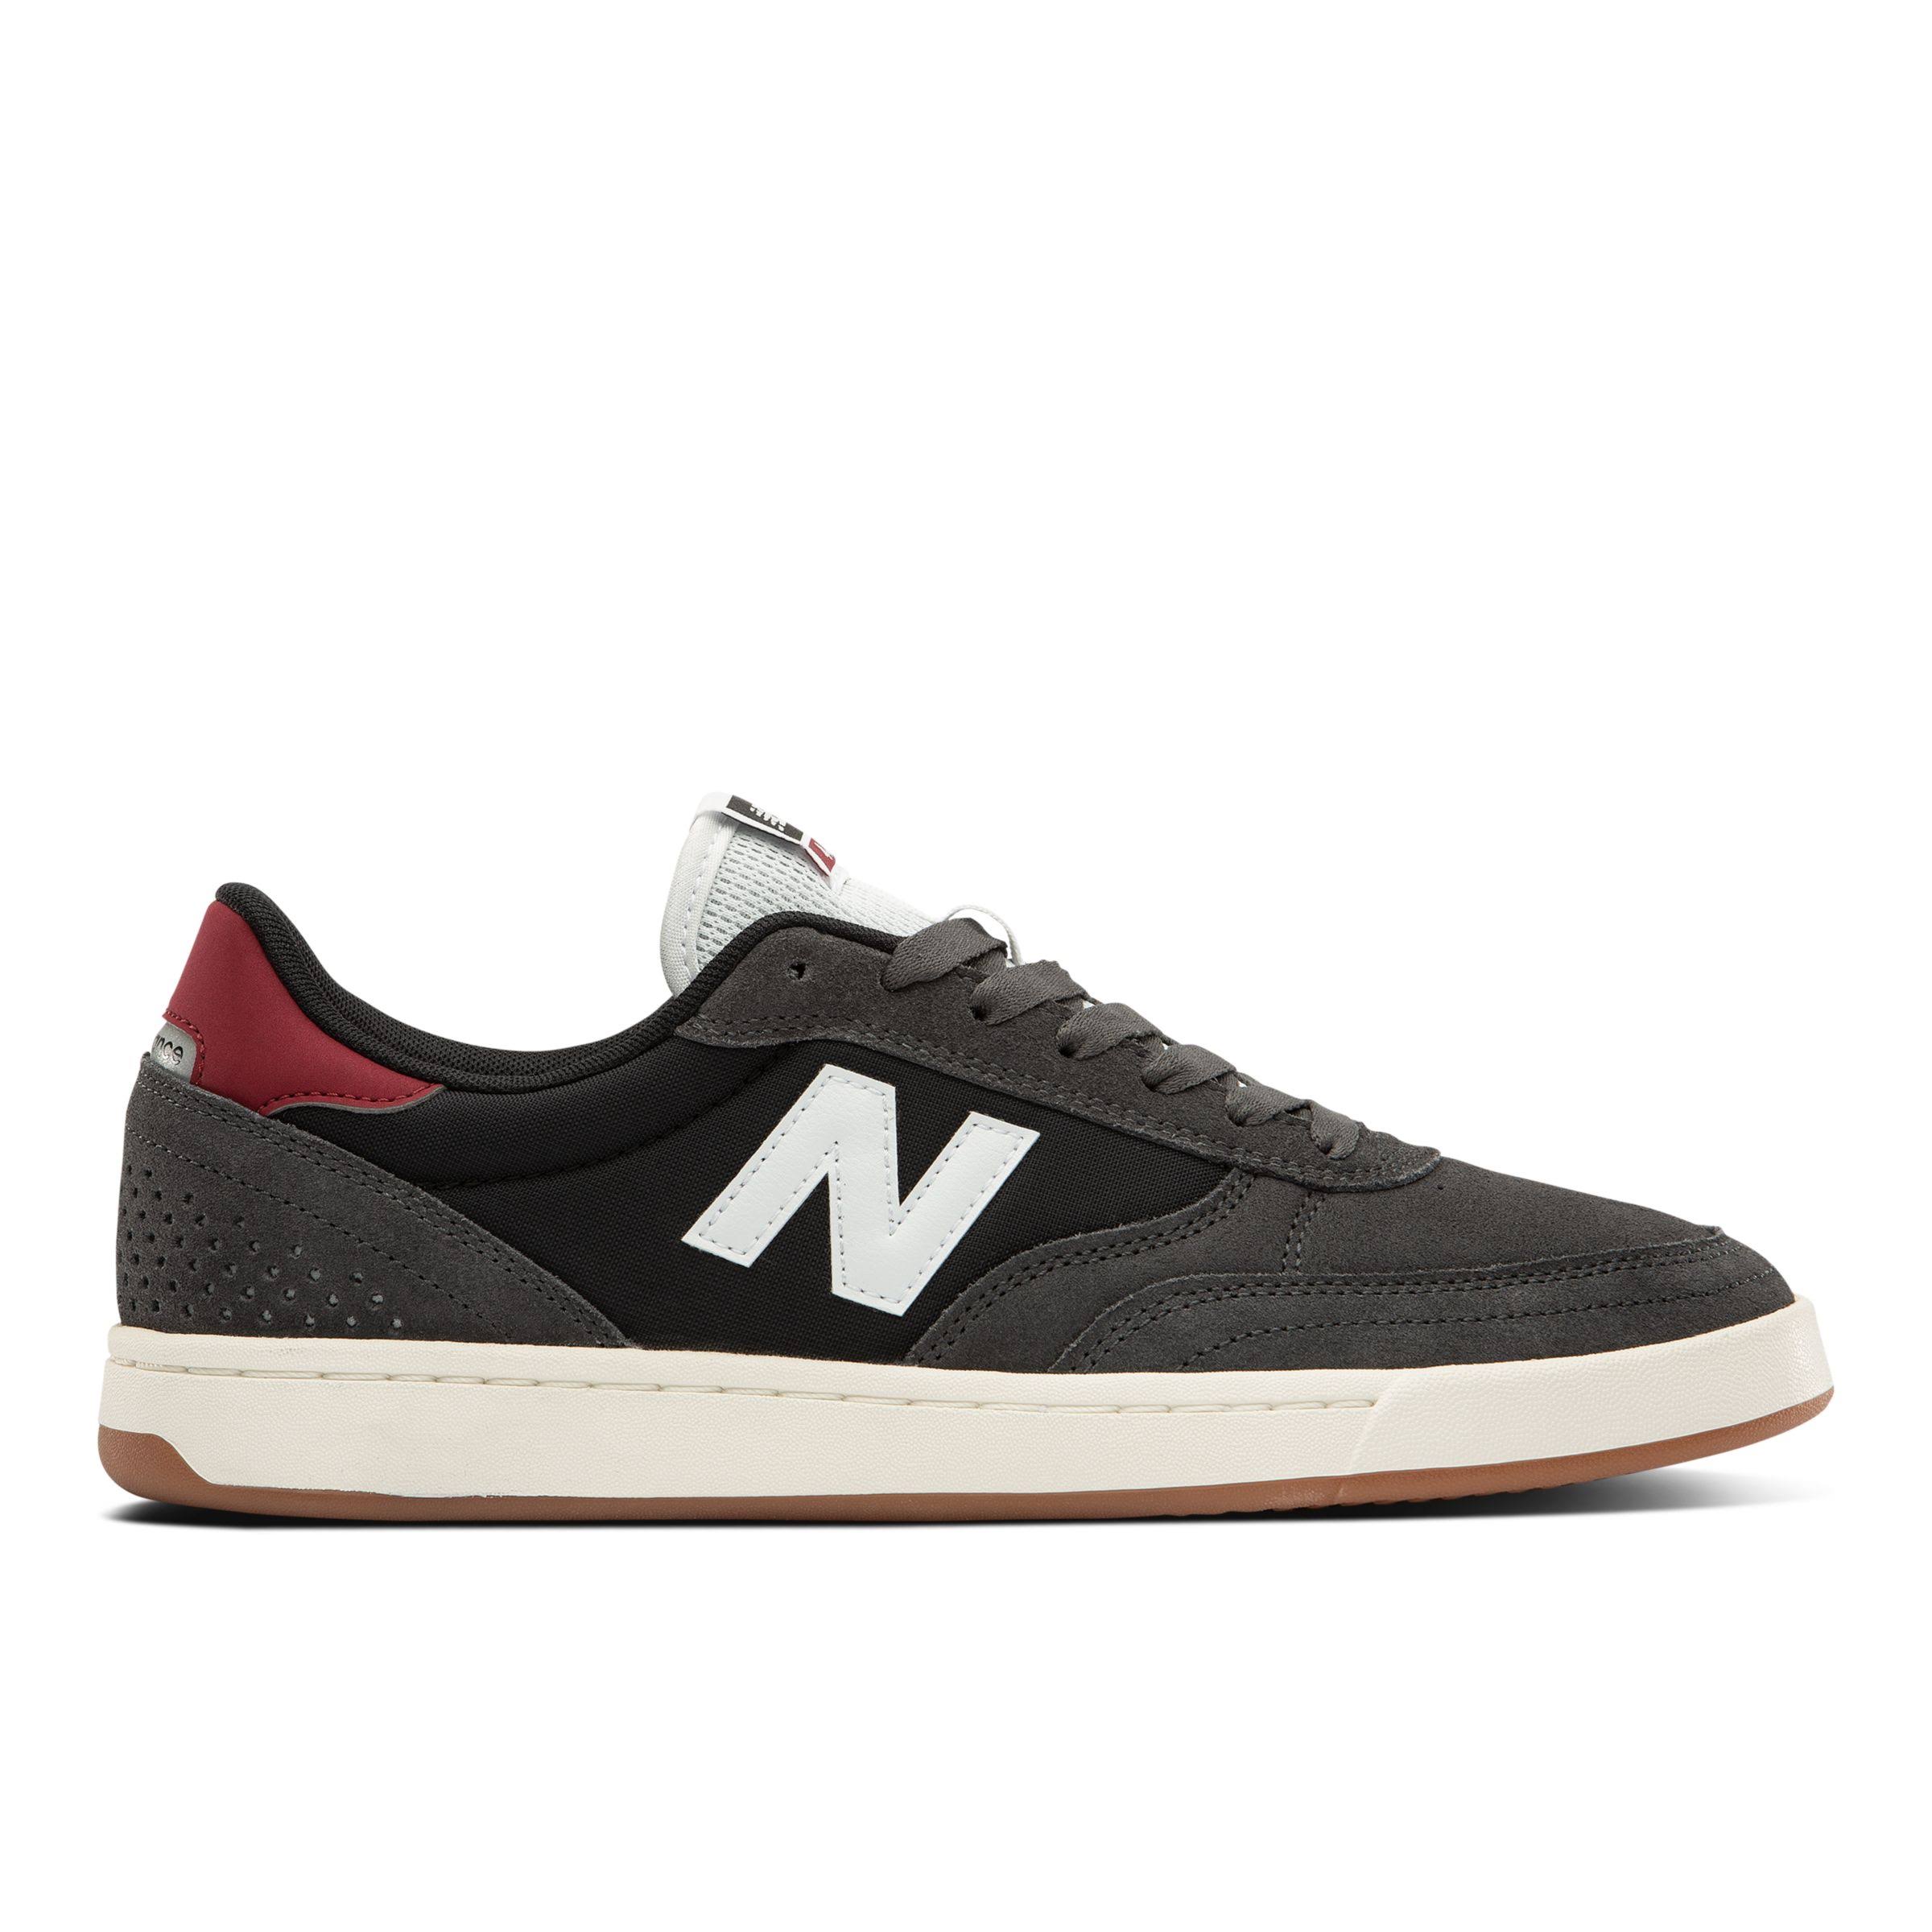 New Balance Numeric 440v1 Mens Shoes - Grey/Black